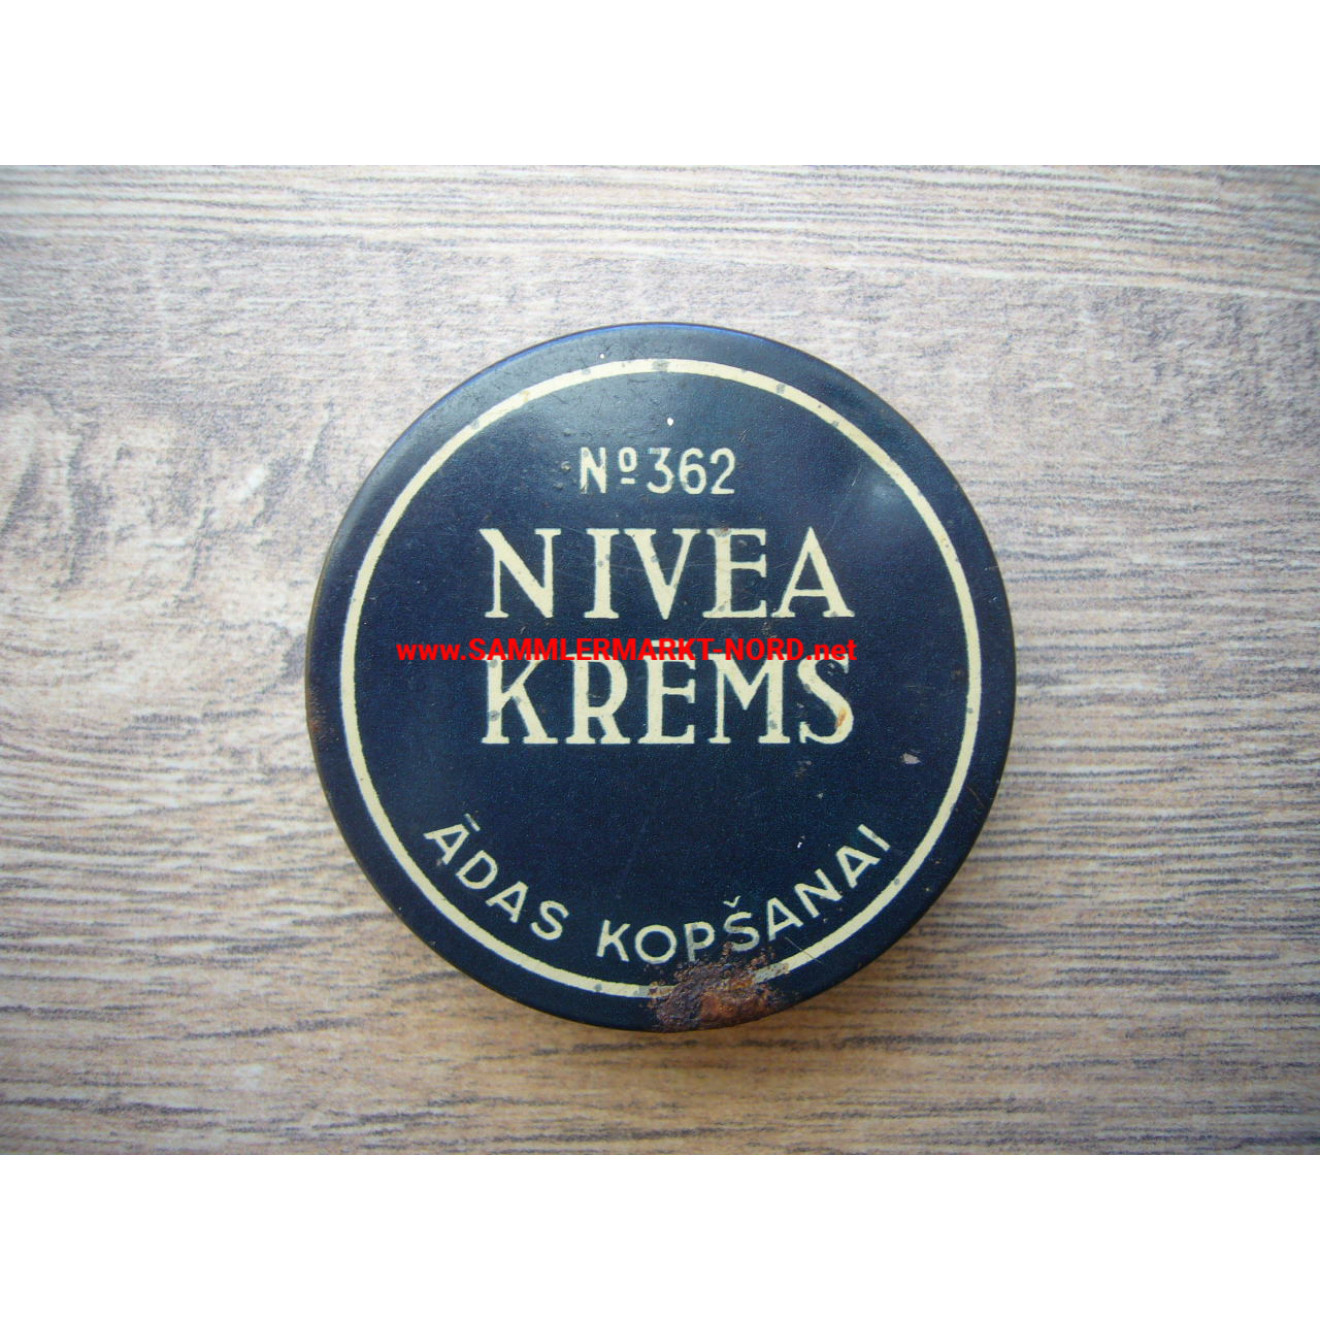 WH personal equipment - NIVEA Creme - Latvian tin